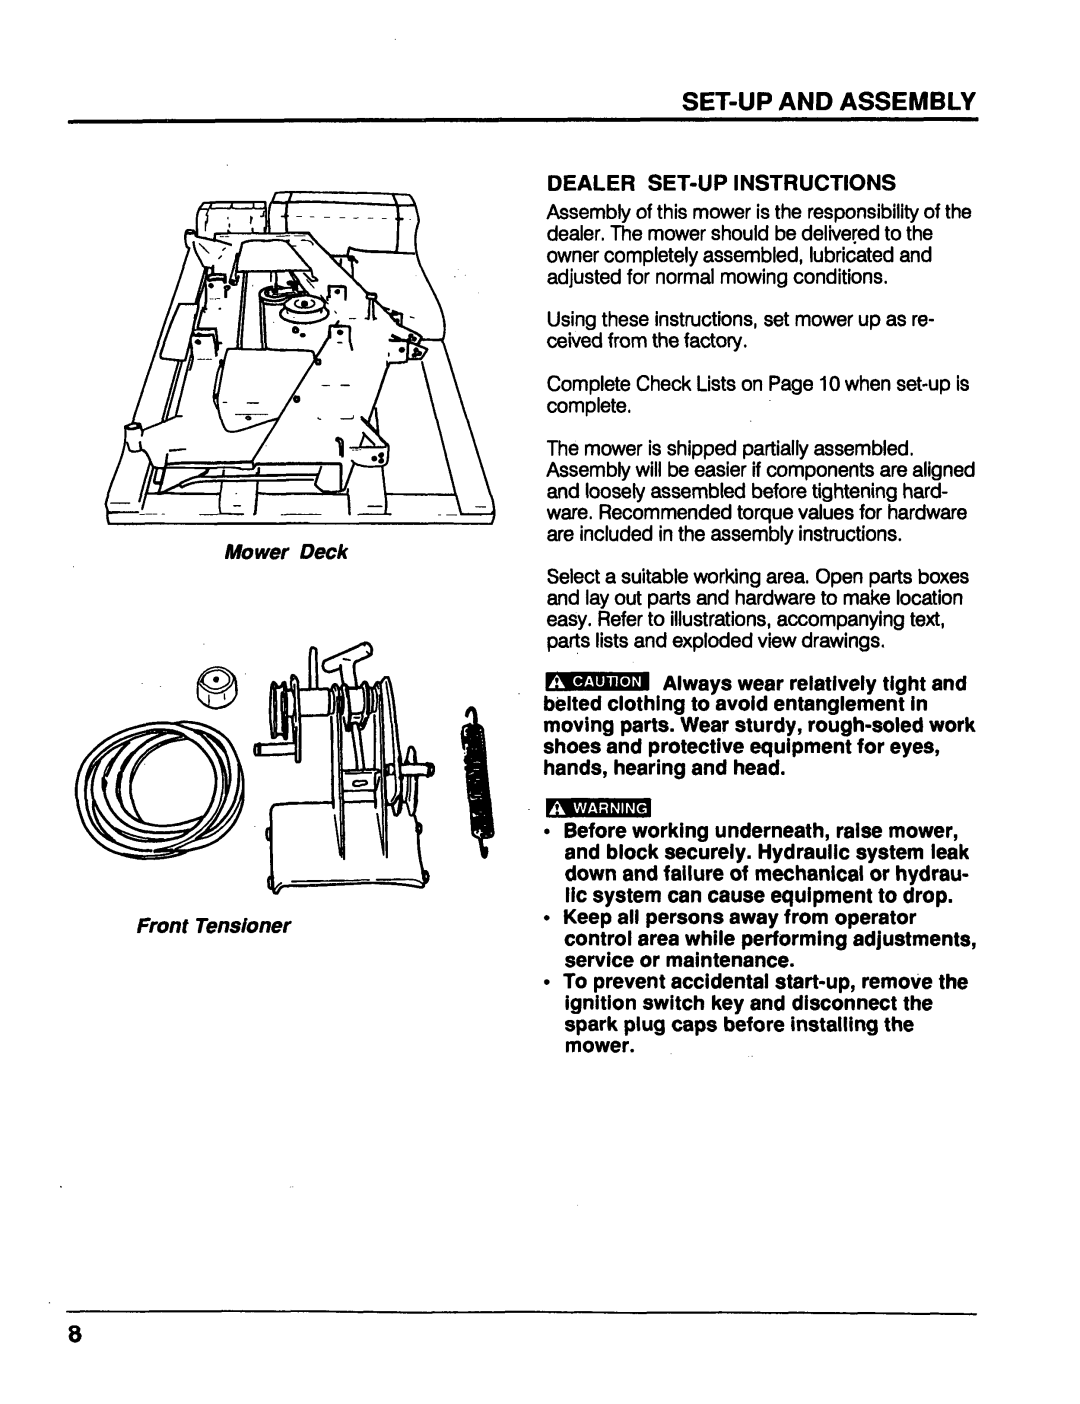 Honda Power Equipment MM52 manual Set-Upand Assembly, Mower Deck Front Tensioner, Dealer Set-Upinstructions 